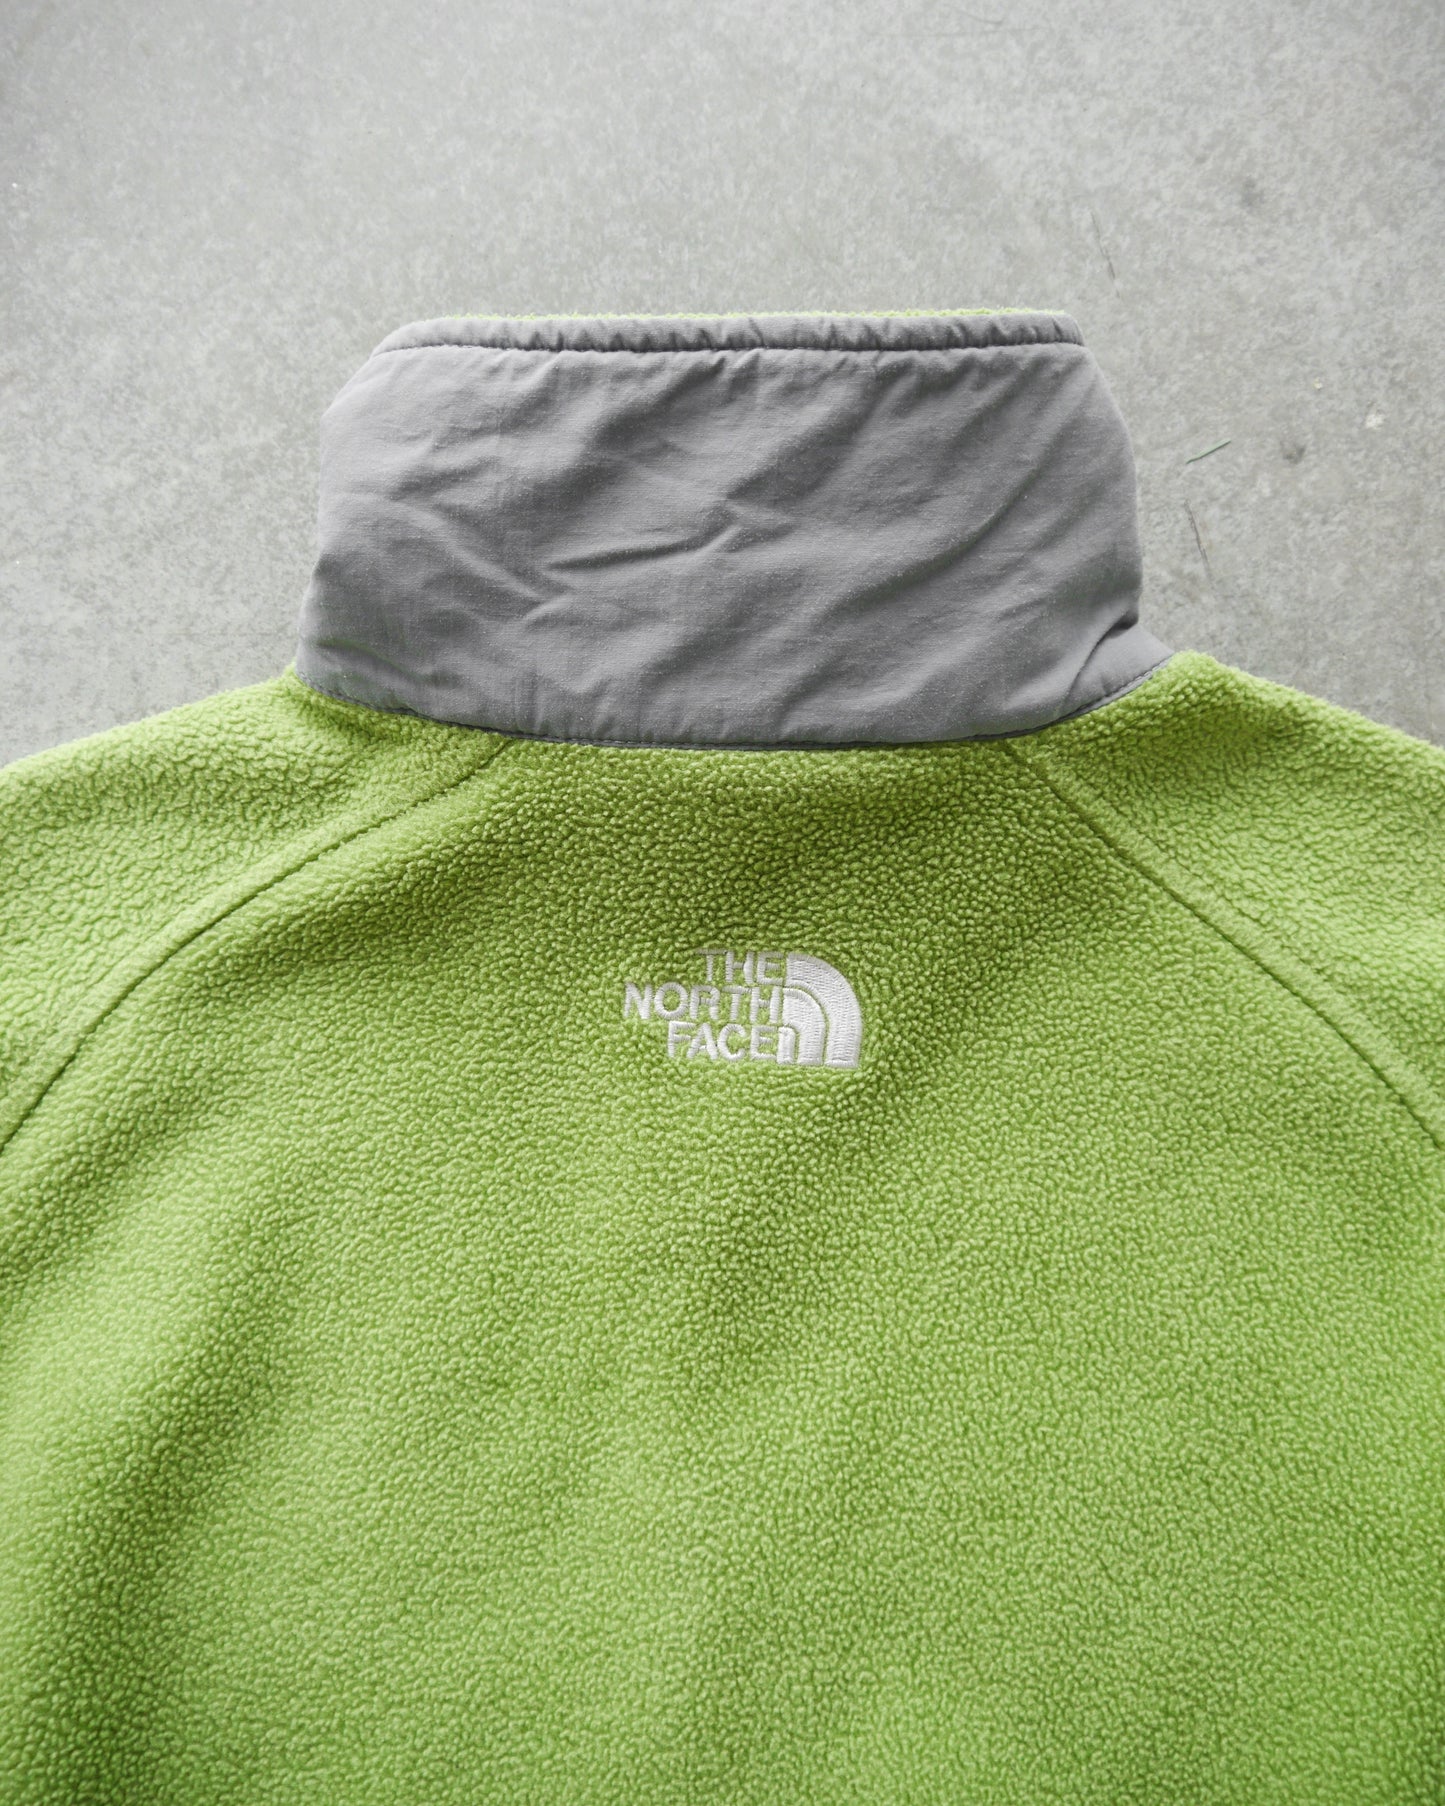 2000s The North Face “Grinch” Full Zip Fleece Jacket (M)